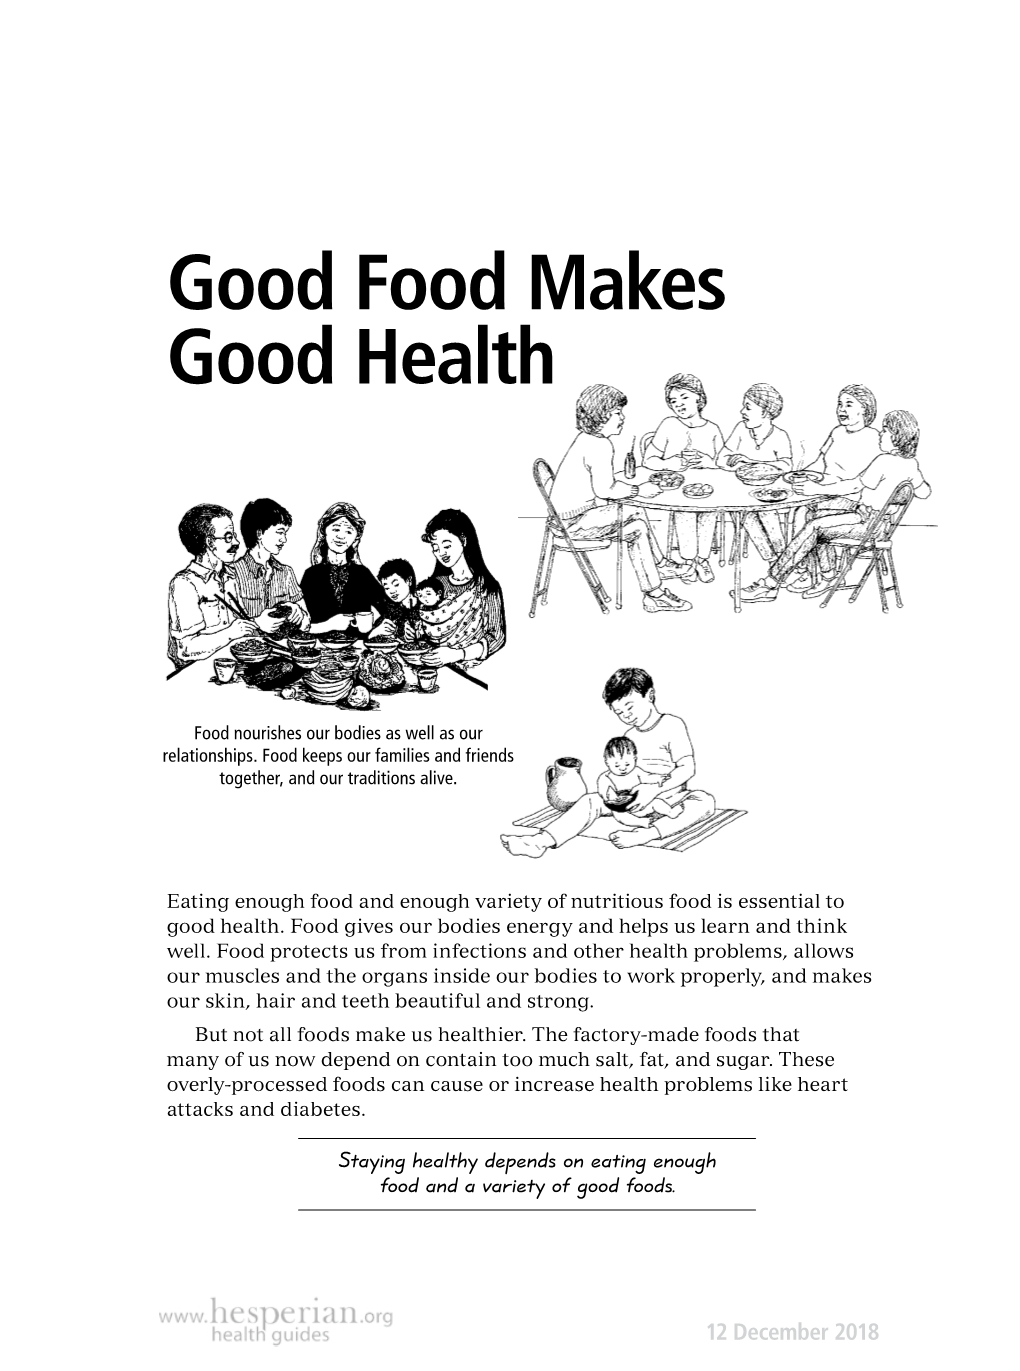 Good Food Makes Good Health